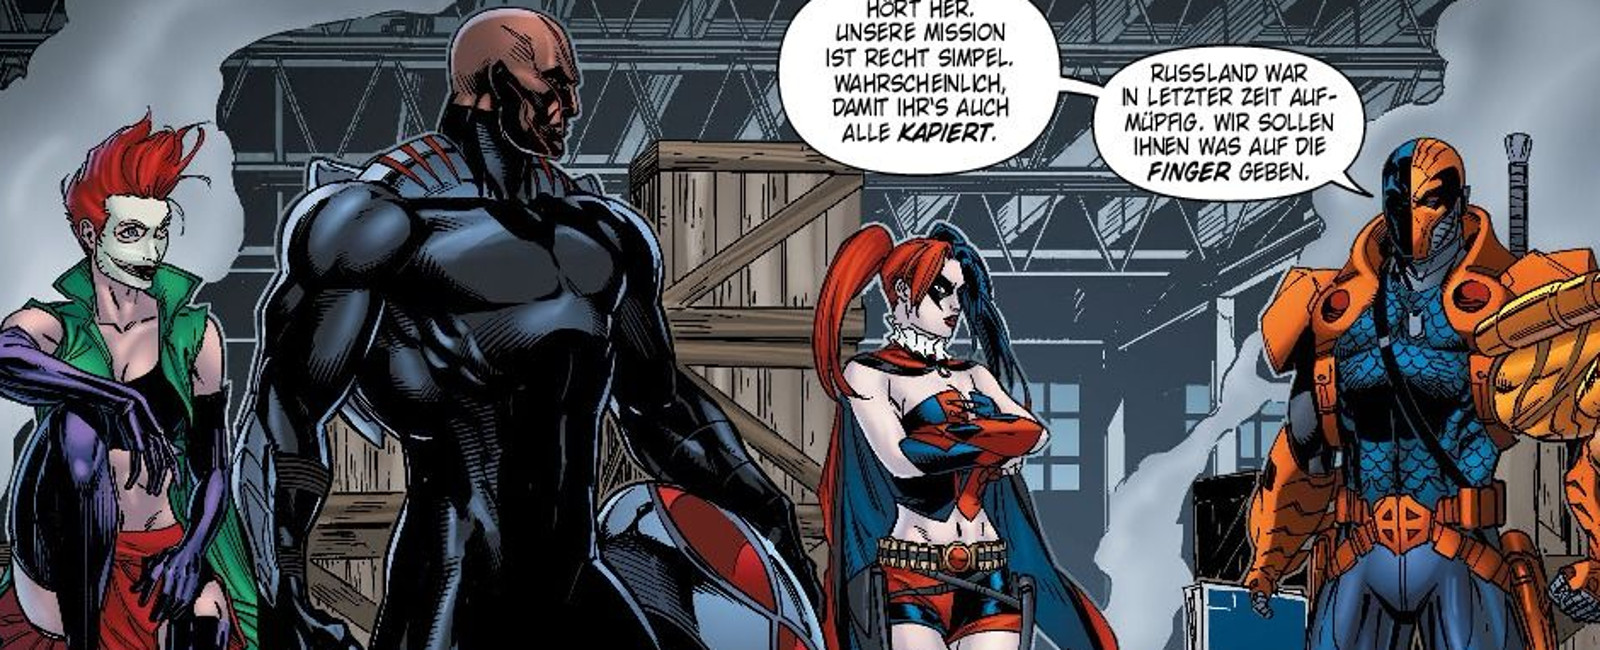 Die neue Suicide Squad Harley Quinn